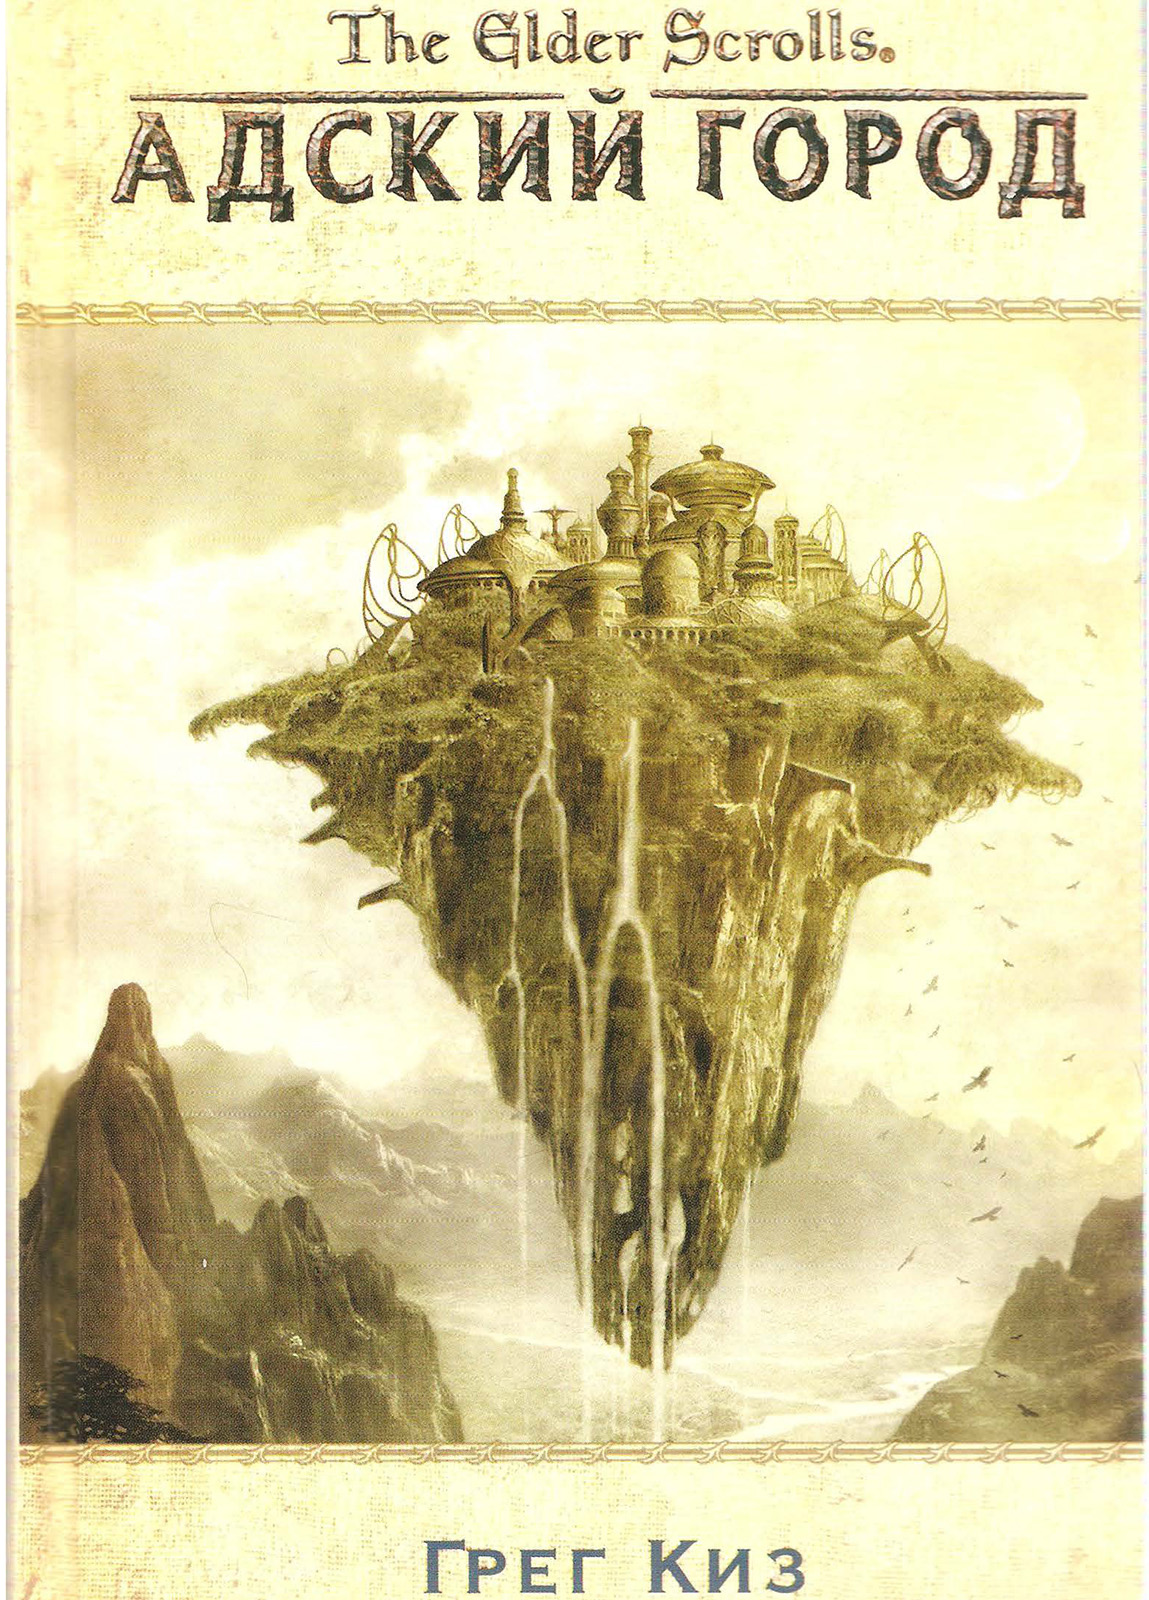 The Elder Scrolls. Адский город (fb2)